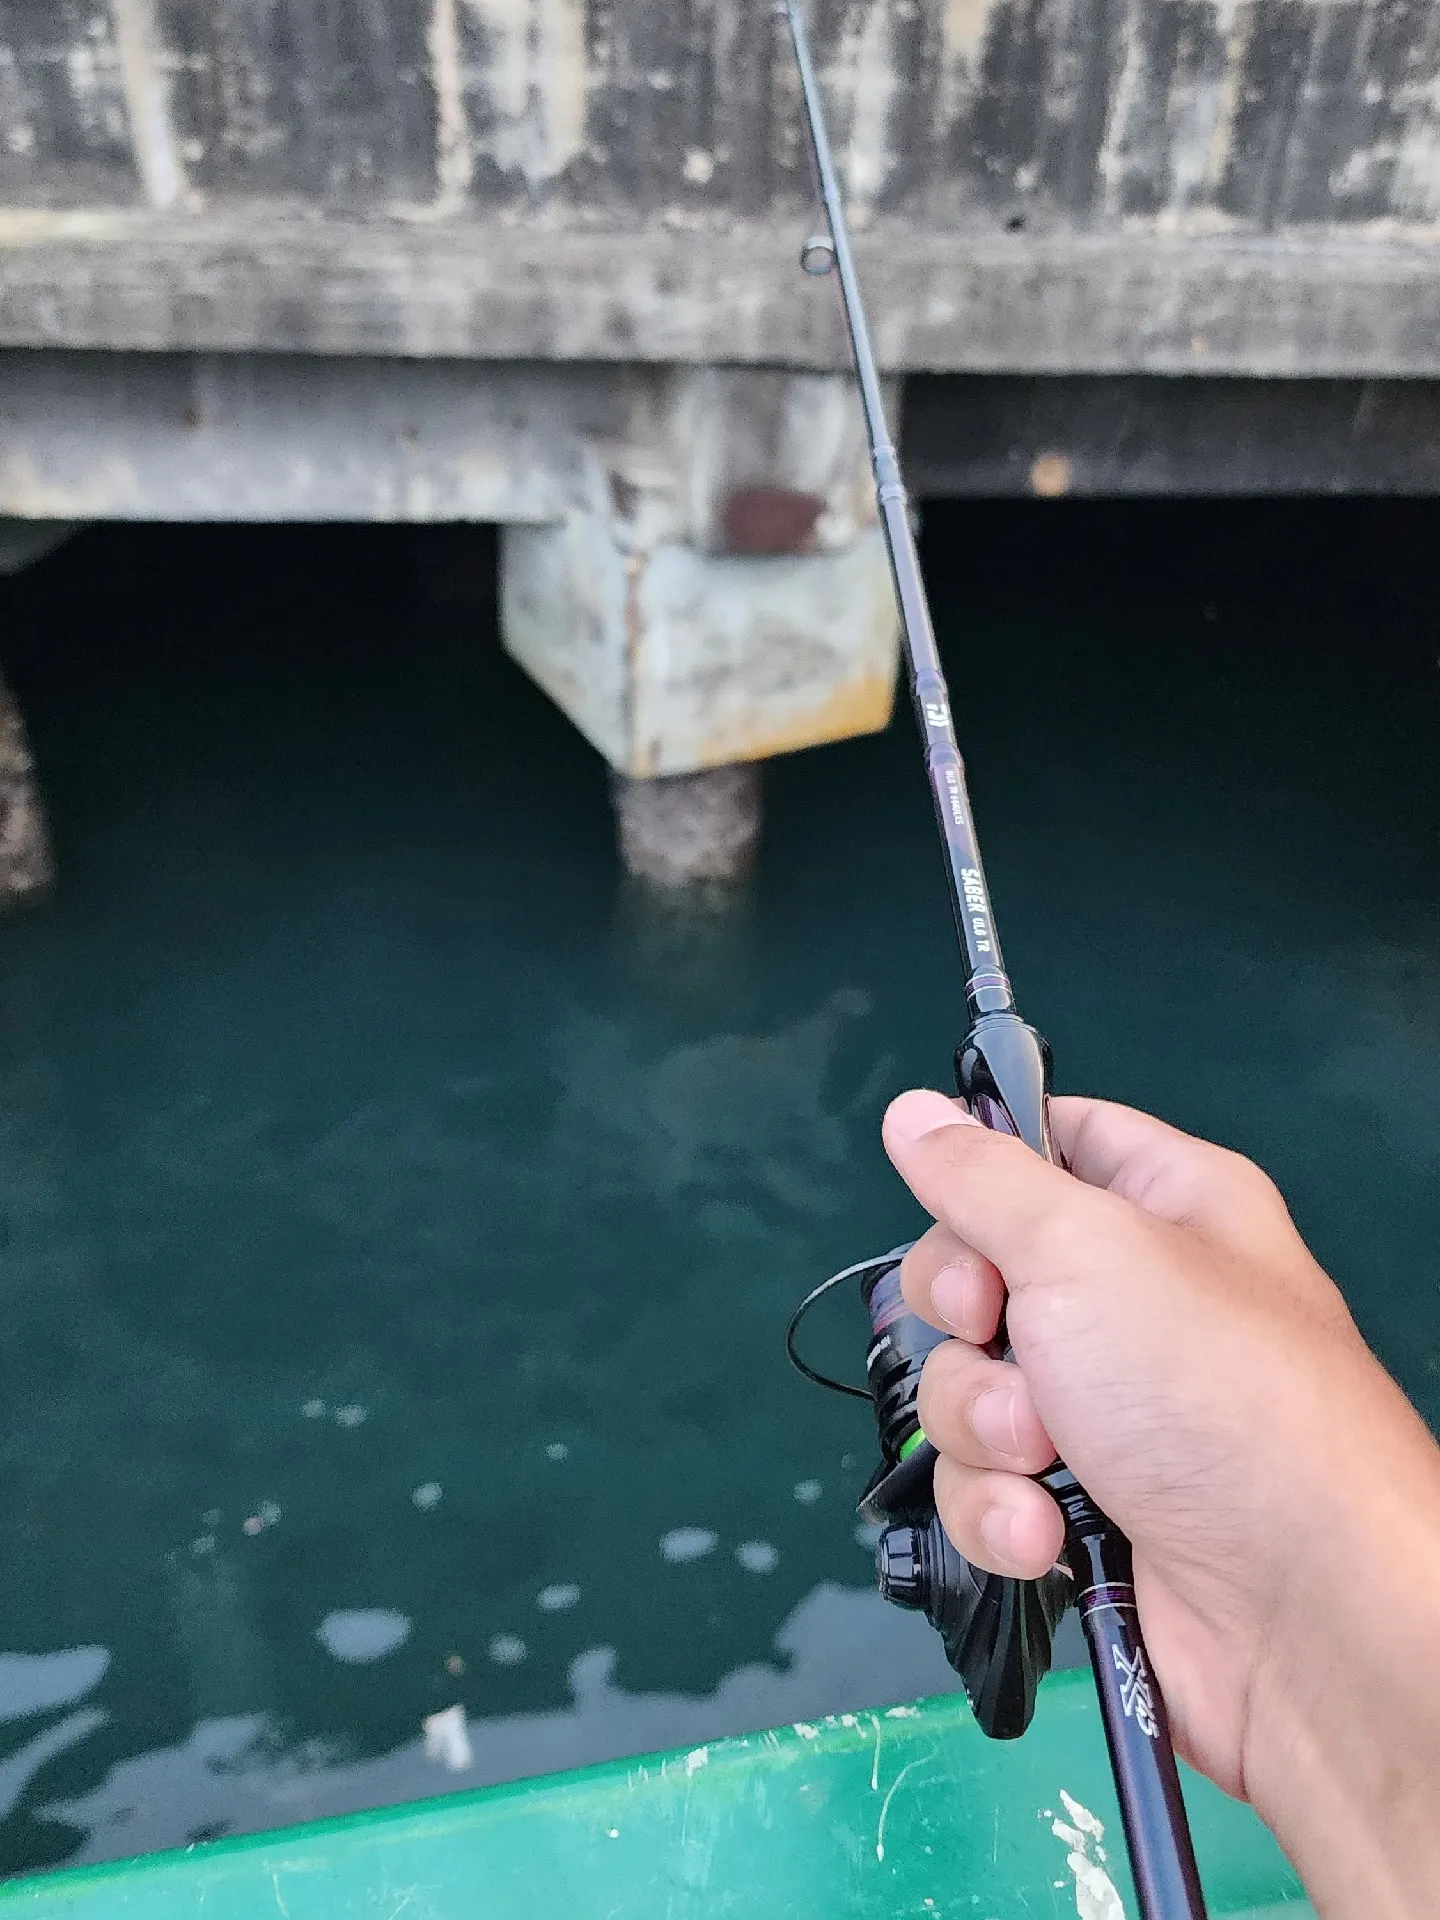 fishing rod daido, Sports Equipment, Fishing on Carousell